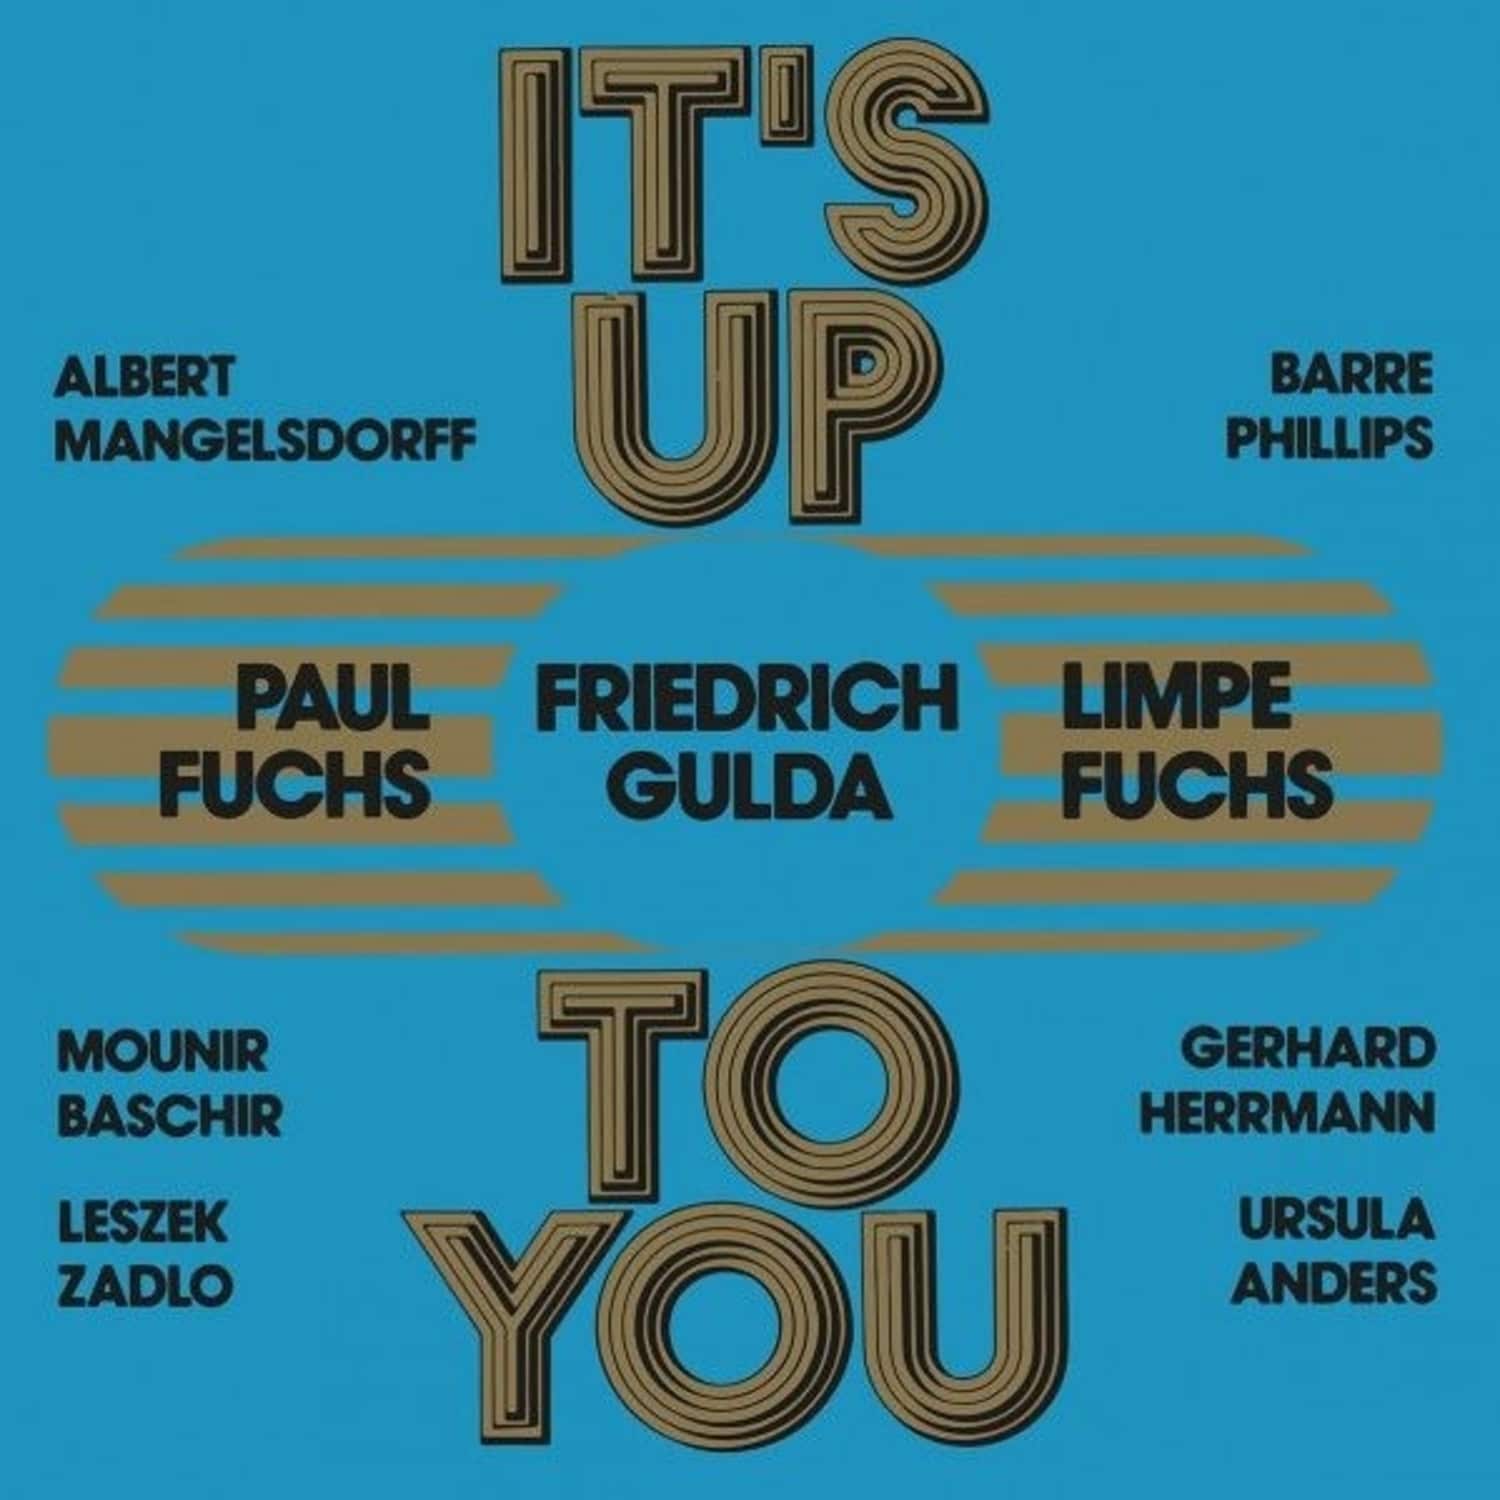 Limpe Fuchs / Paul Fuchs / Friedrich Gulda - IT S UP TO YOU 